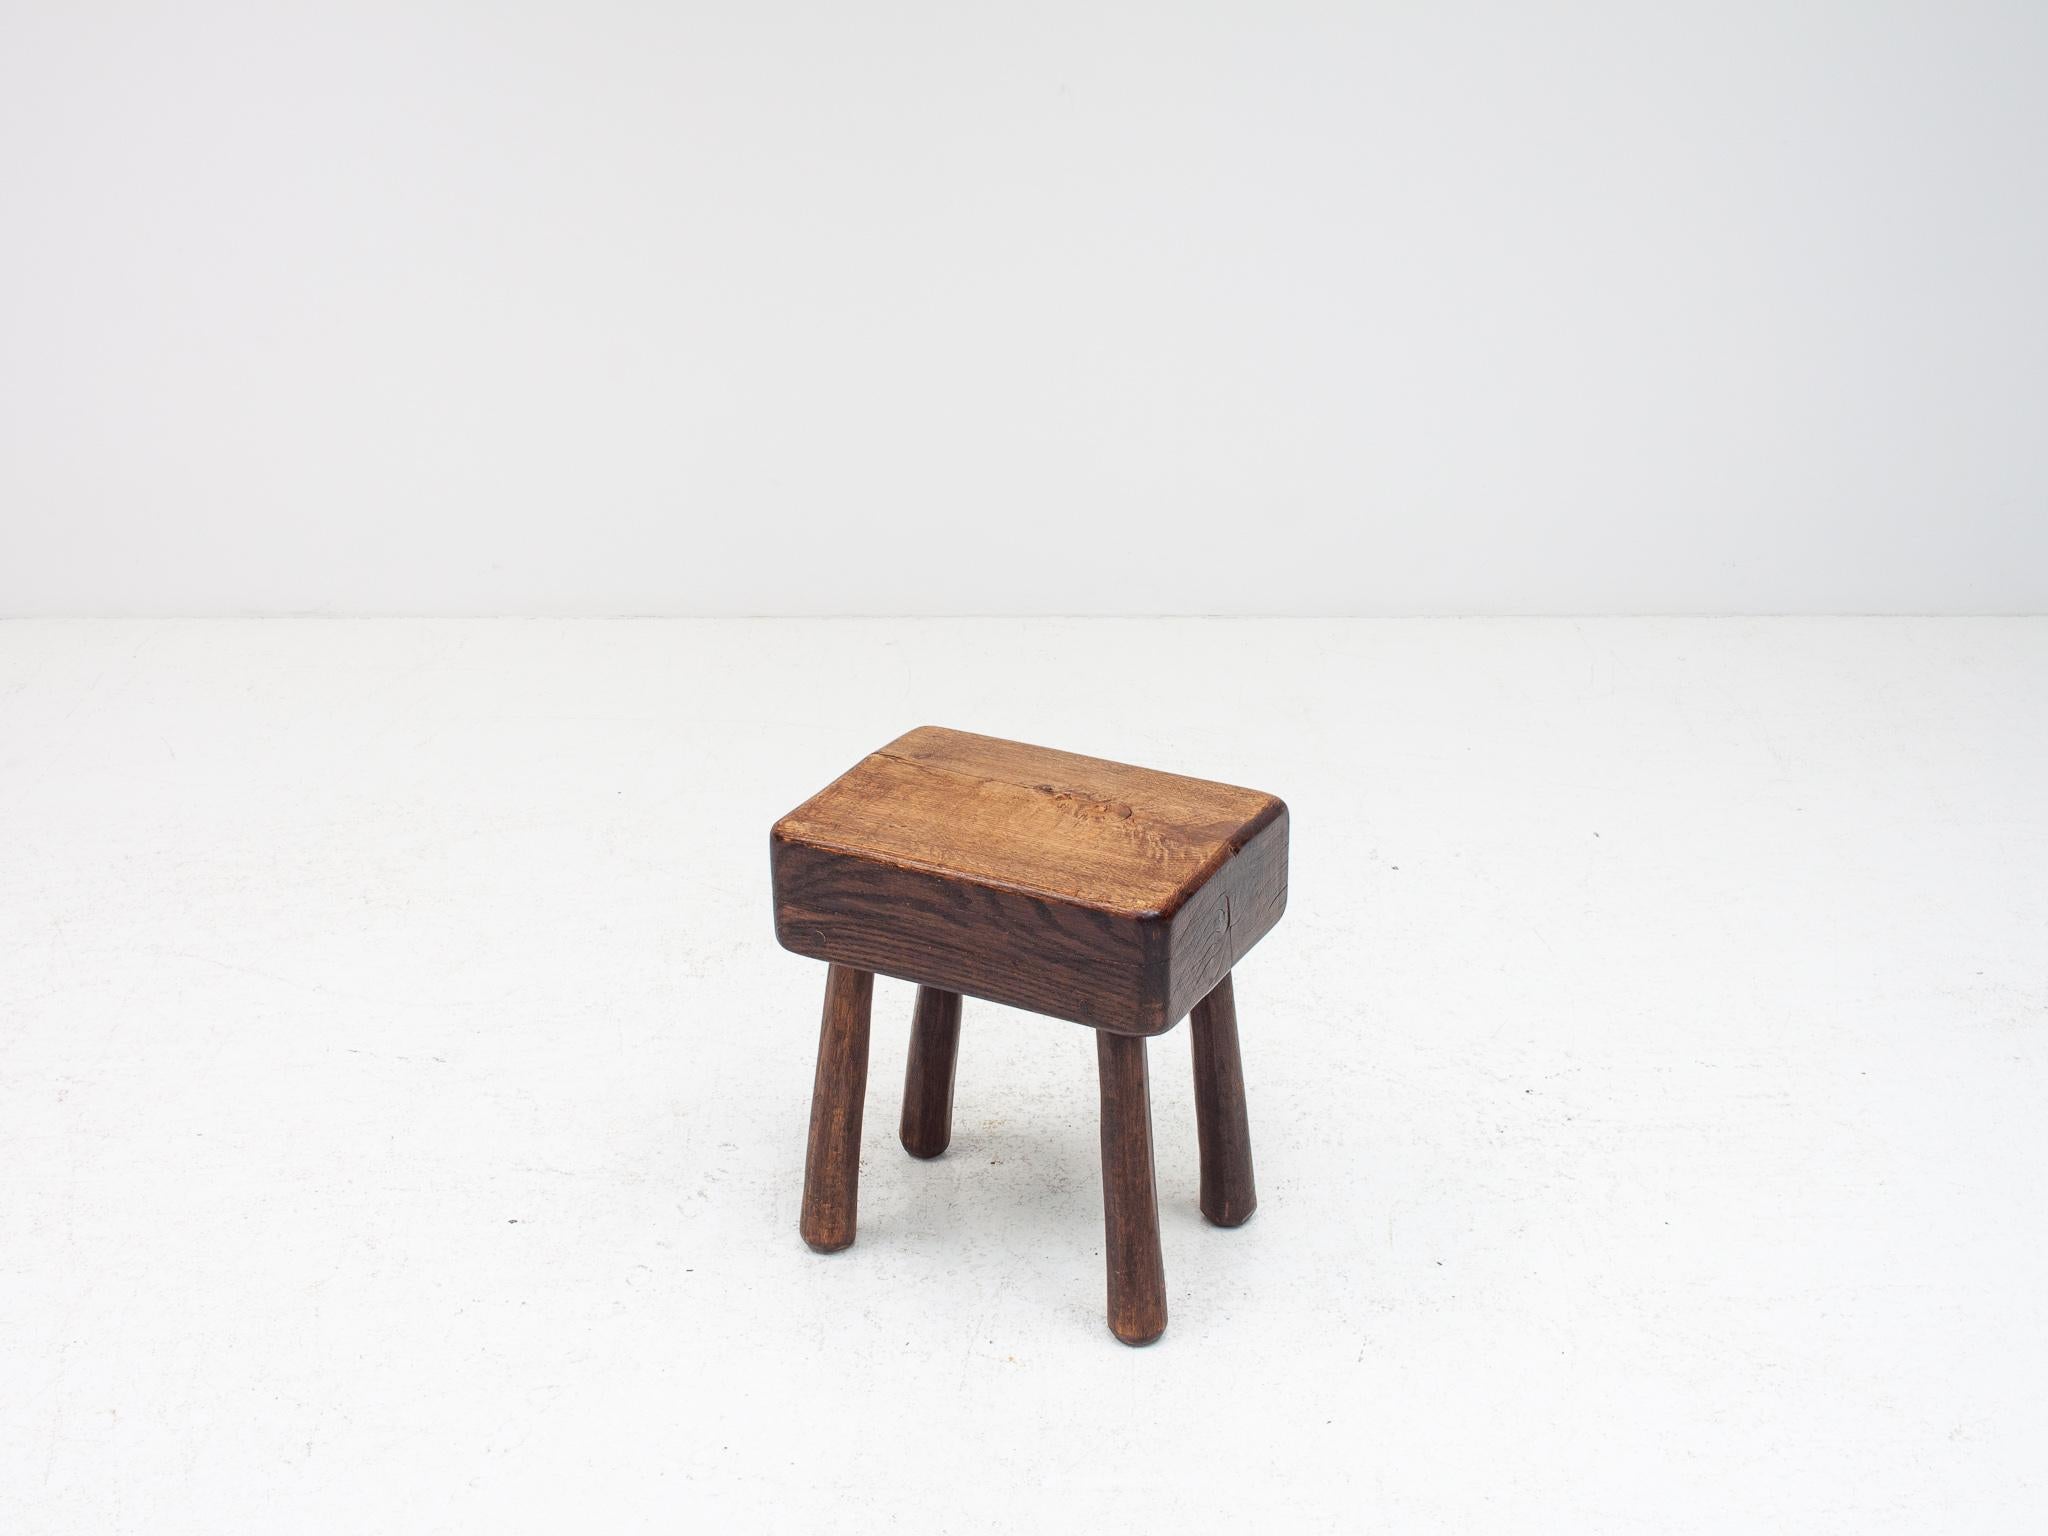  Rustikaler Vintage-Hocker/Tisch, Belgien, 1900er Jahre (20. Jahrhundert)